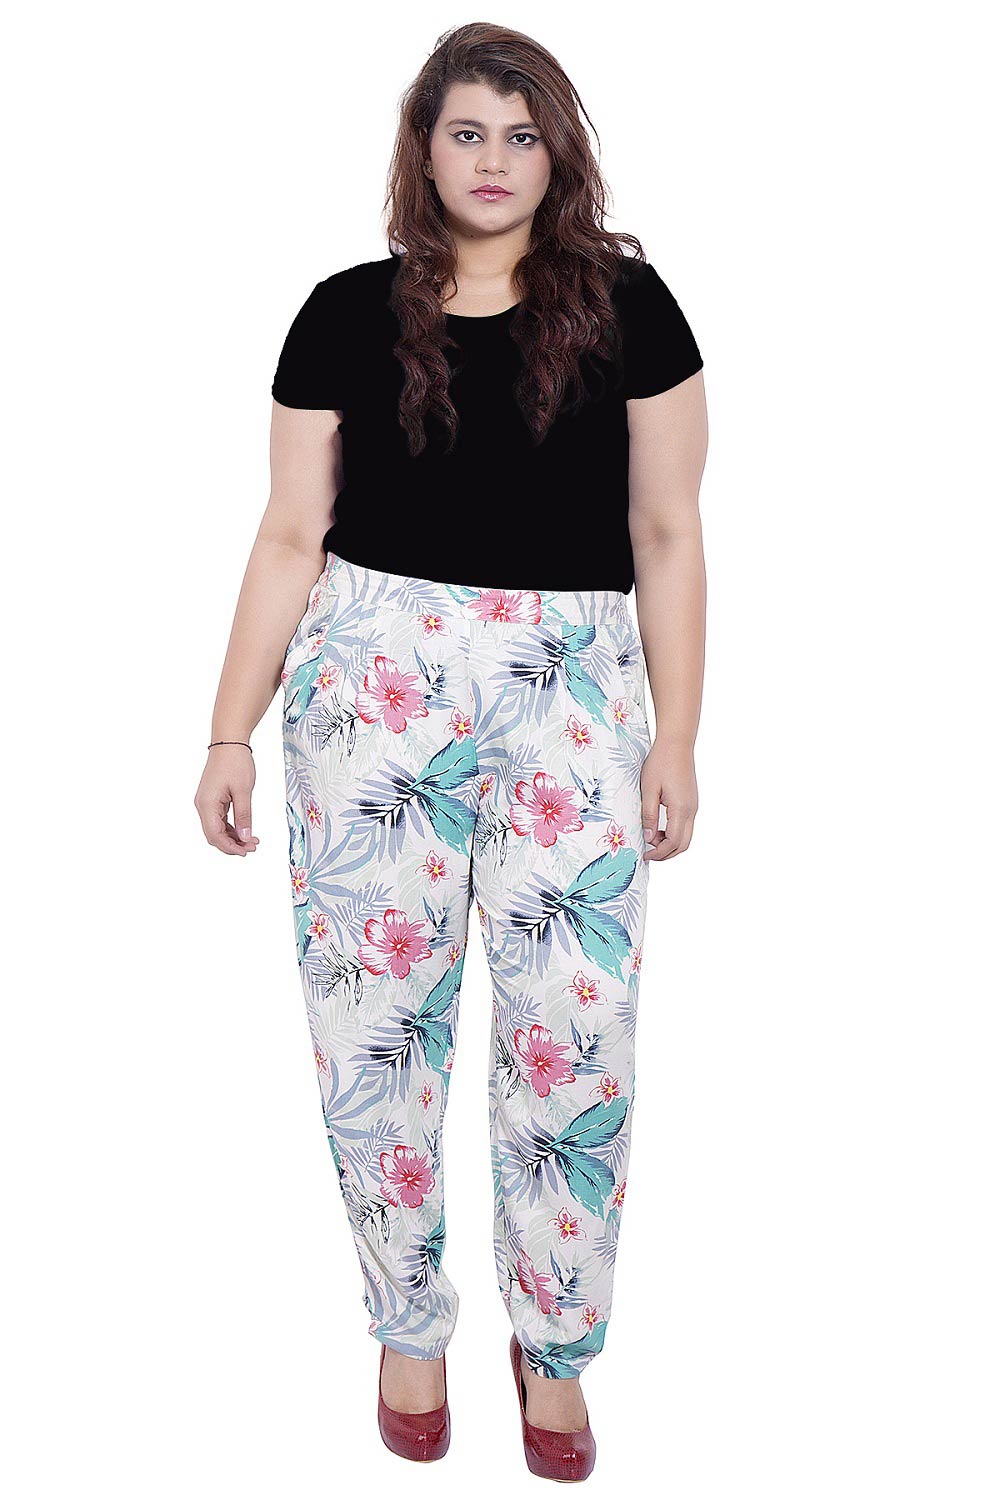 Plus Size Floral Print Multicolored Trouser - LASTINCH